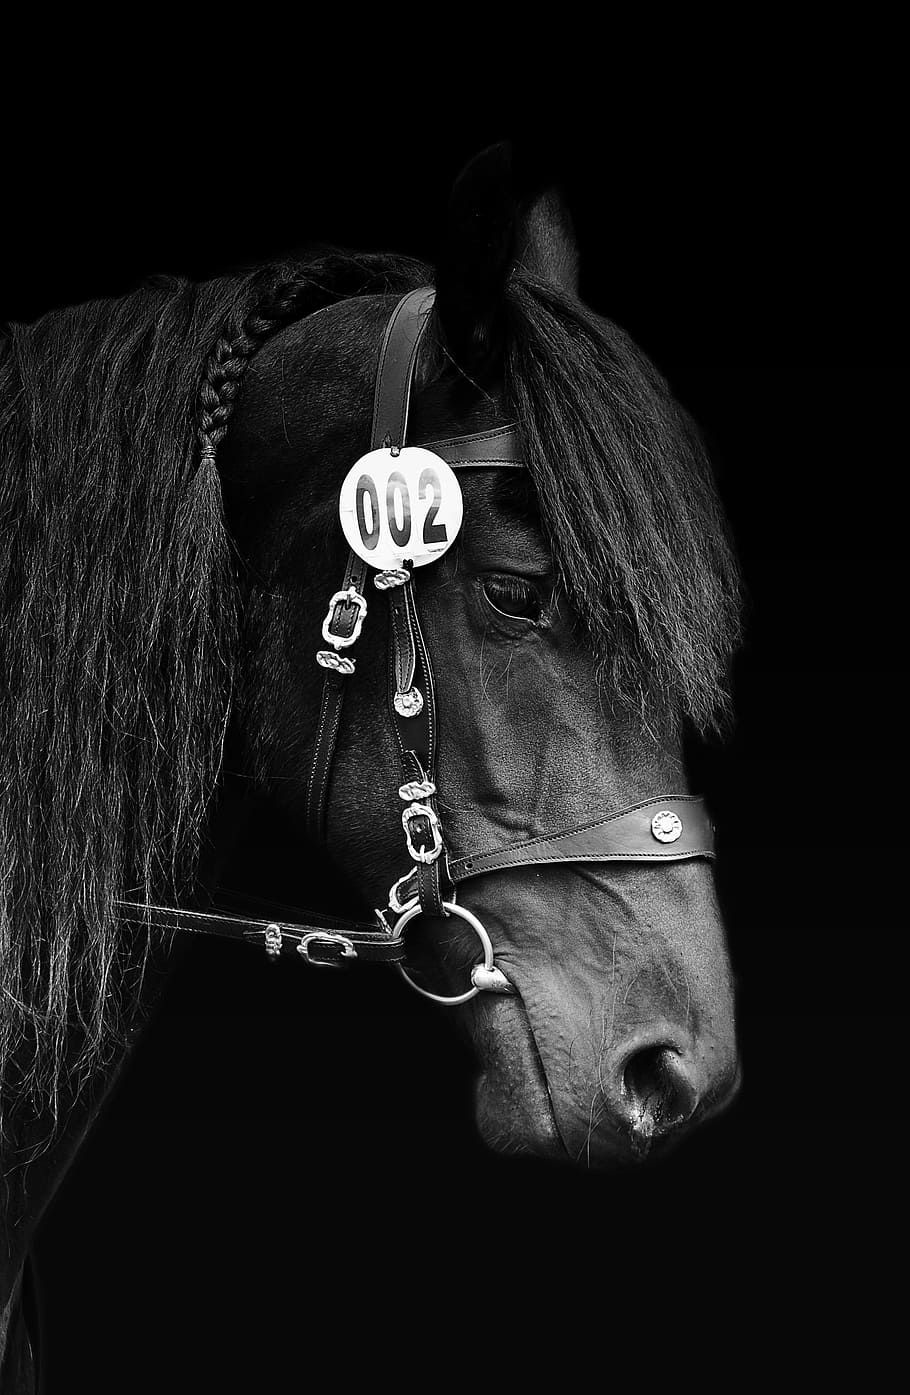 kepala kuda hitam, kuda, hitam dan putih, putih, hitam, hewan, kepala kuda, rap, hitam putih, hewan berkuku